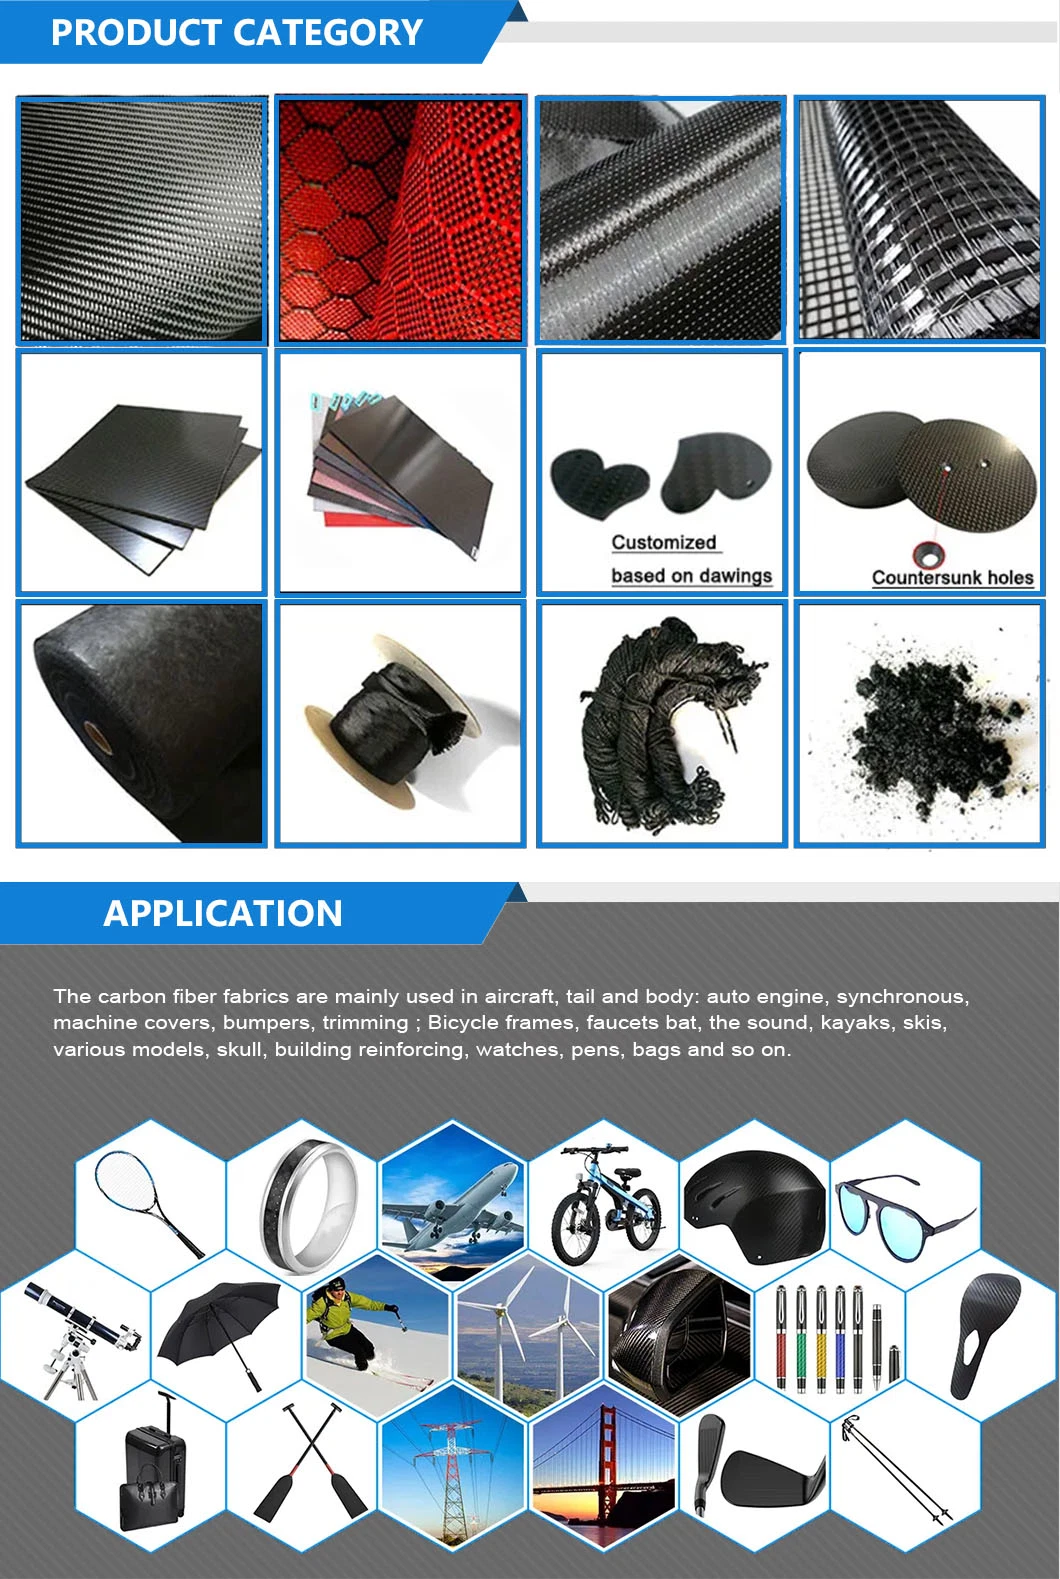 1K 3K 6K 12K Plain and Twill Carbon Fiber Fabric Manufacturer for Yacht/Sporting Goods/Automotive/Building